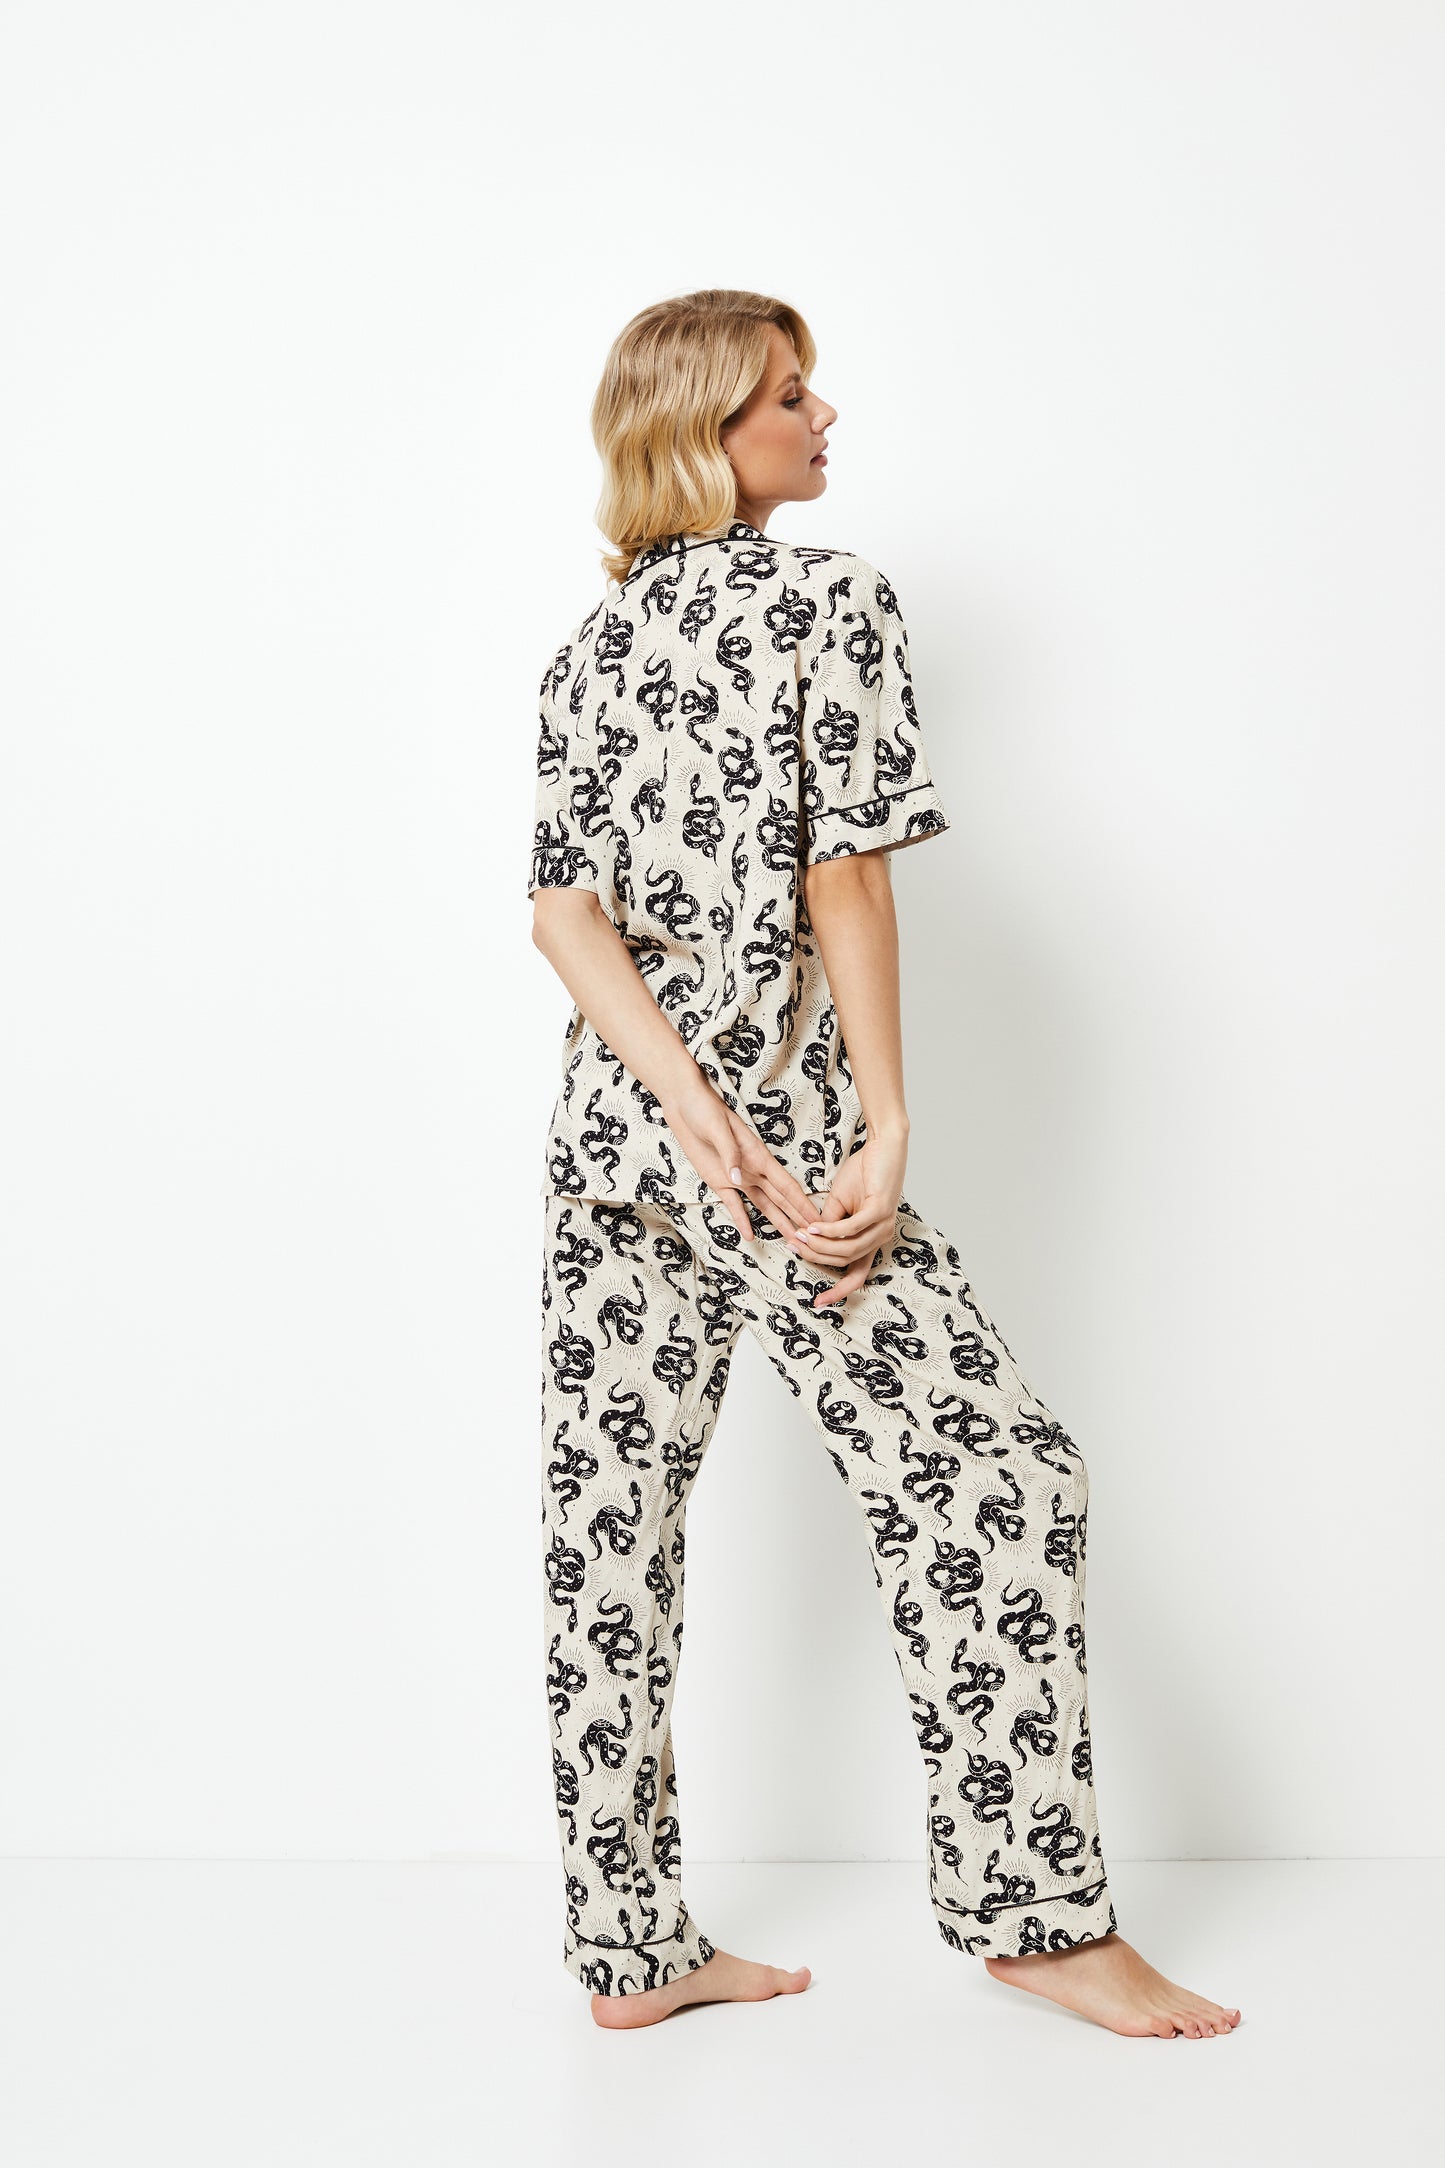 Aruelle Ladies Long Sleeve Pyjamas 'Dakara' Snake Print PJ Set